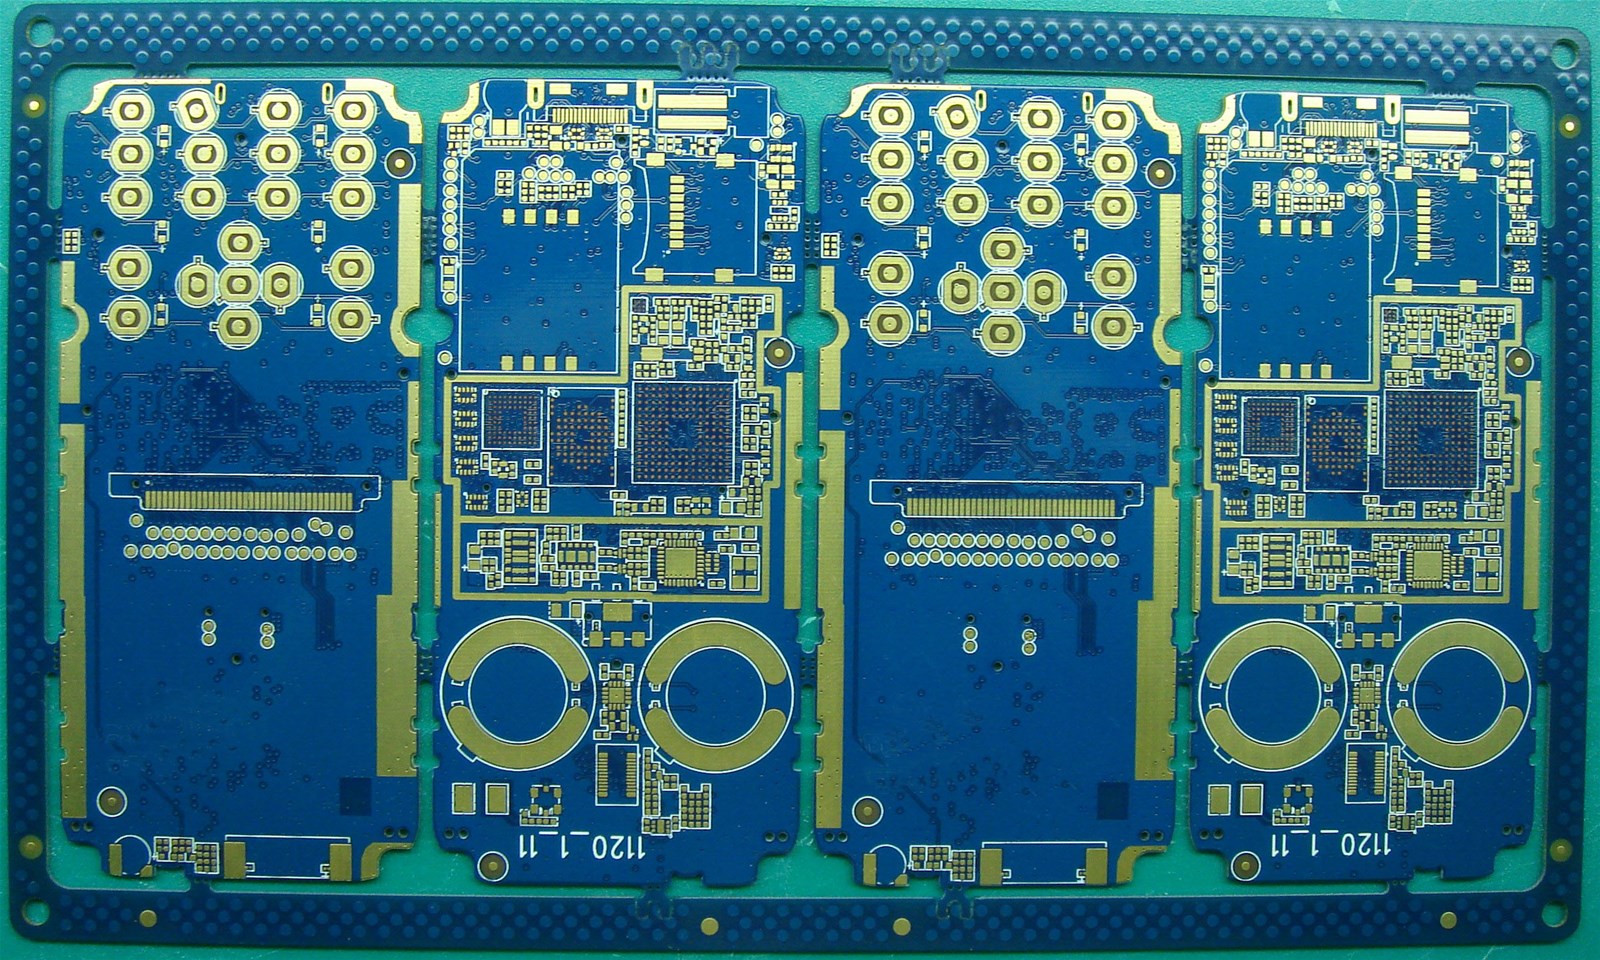 printed circuit board supplier